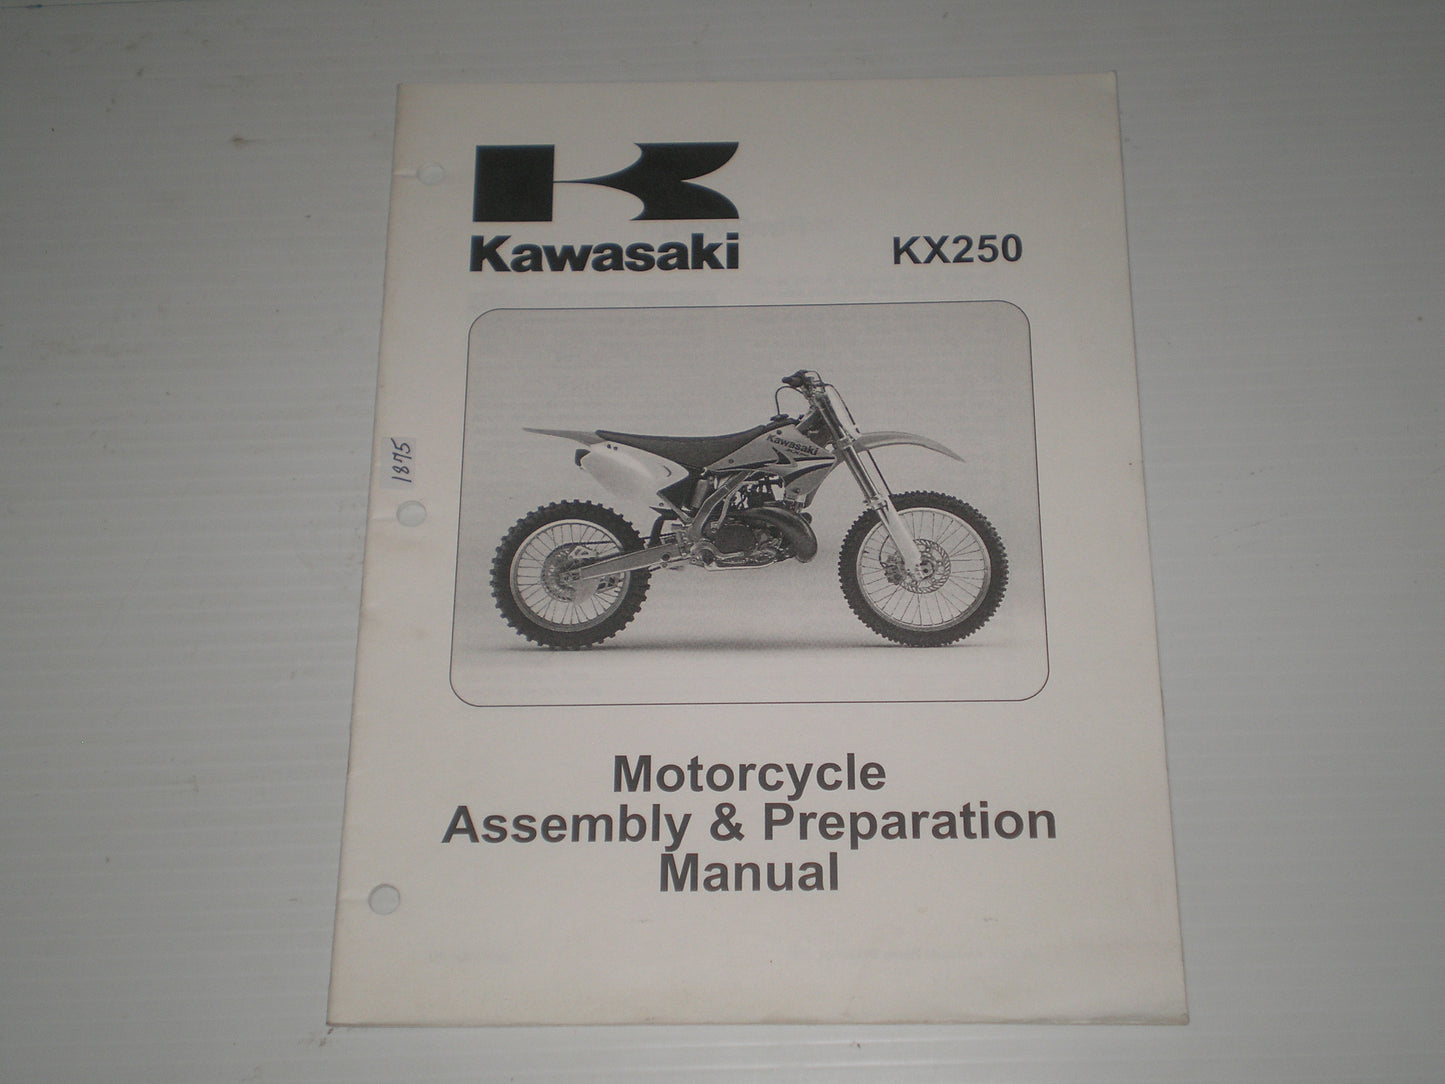 KAWASAKI KX250 / KX250 R1  2005  Assembly & Preparation Manual  99931-1440-01  #1875